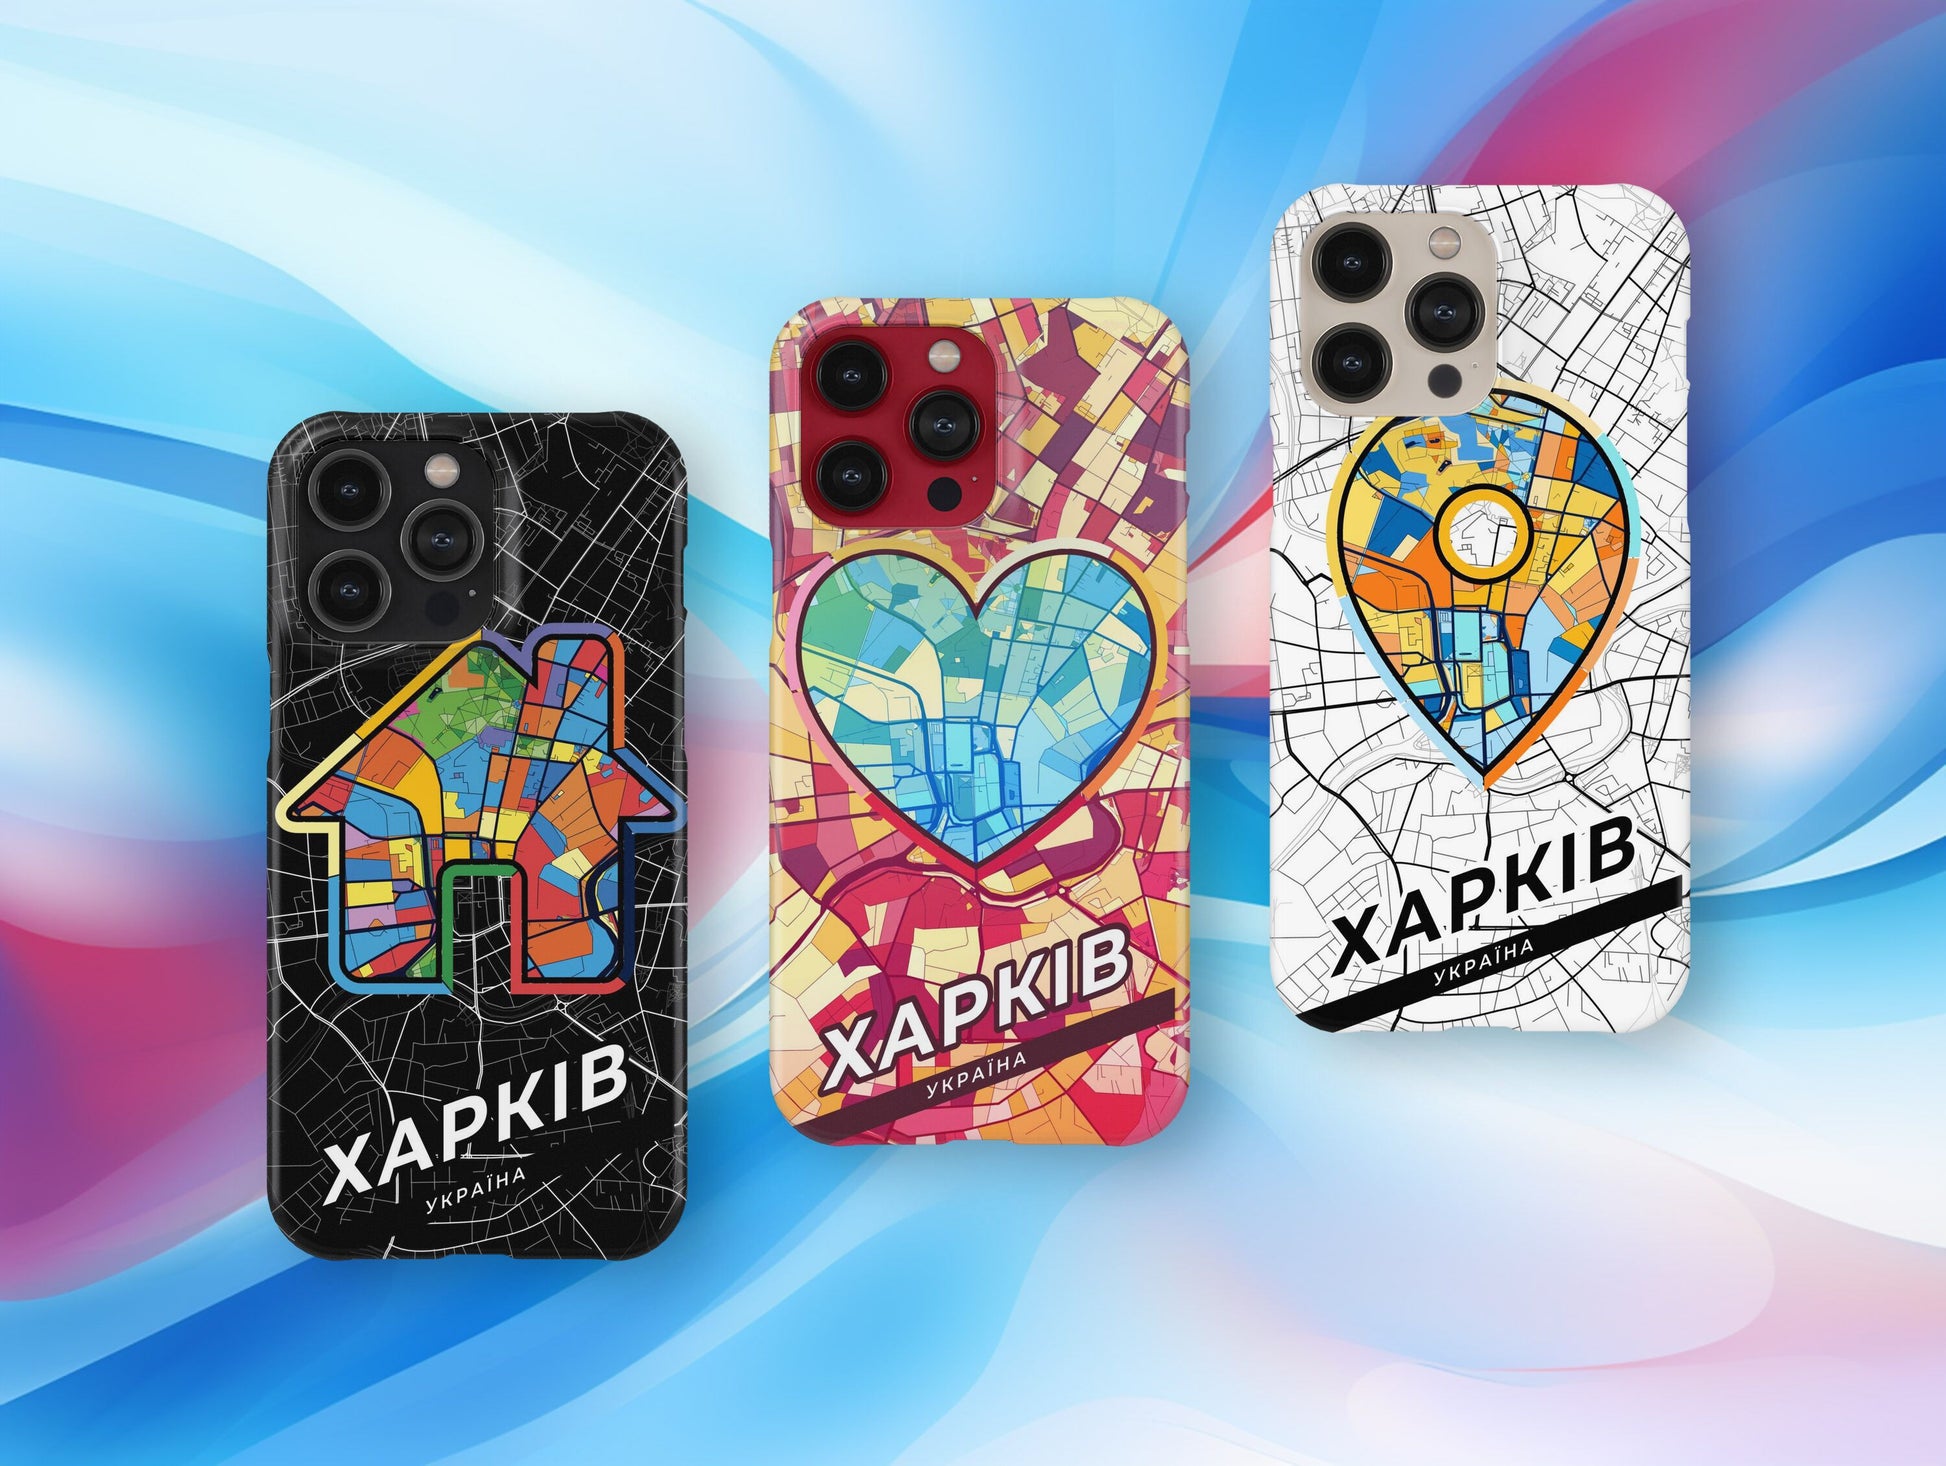 Kharkiv Ukraine slim phone case with colorful icon. Birthday, wedding or housewarming gift. Couple match cases.